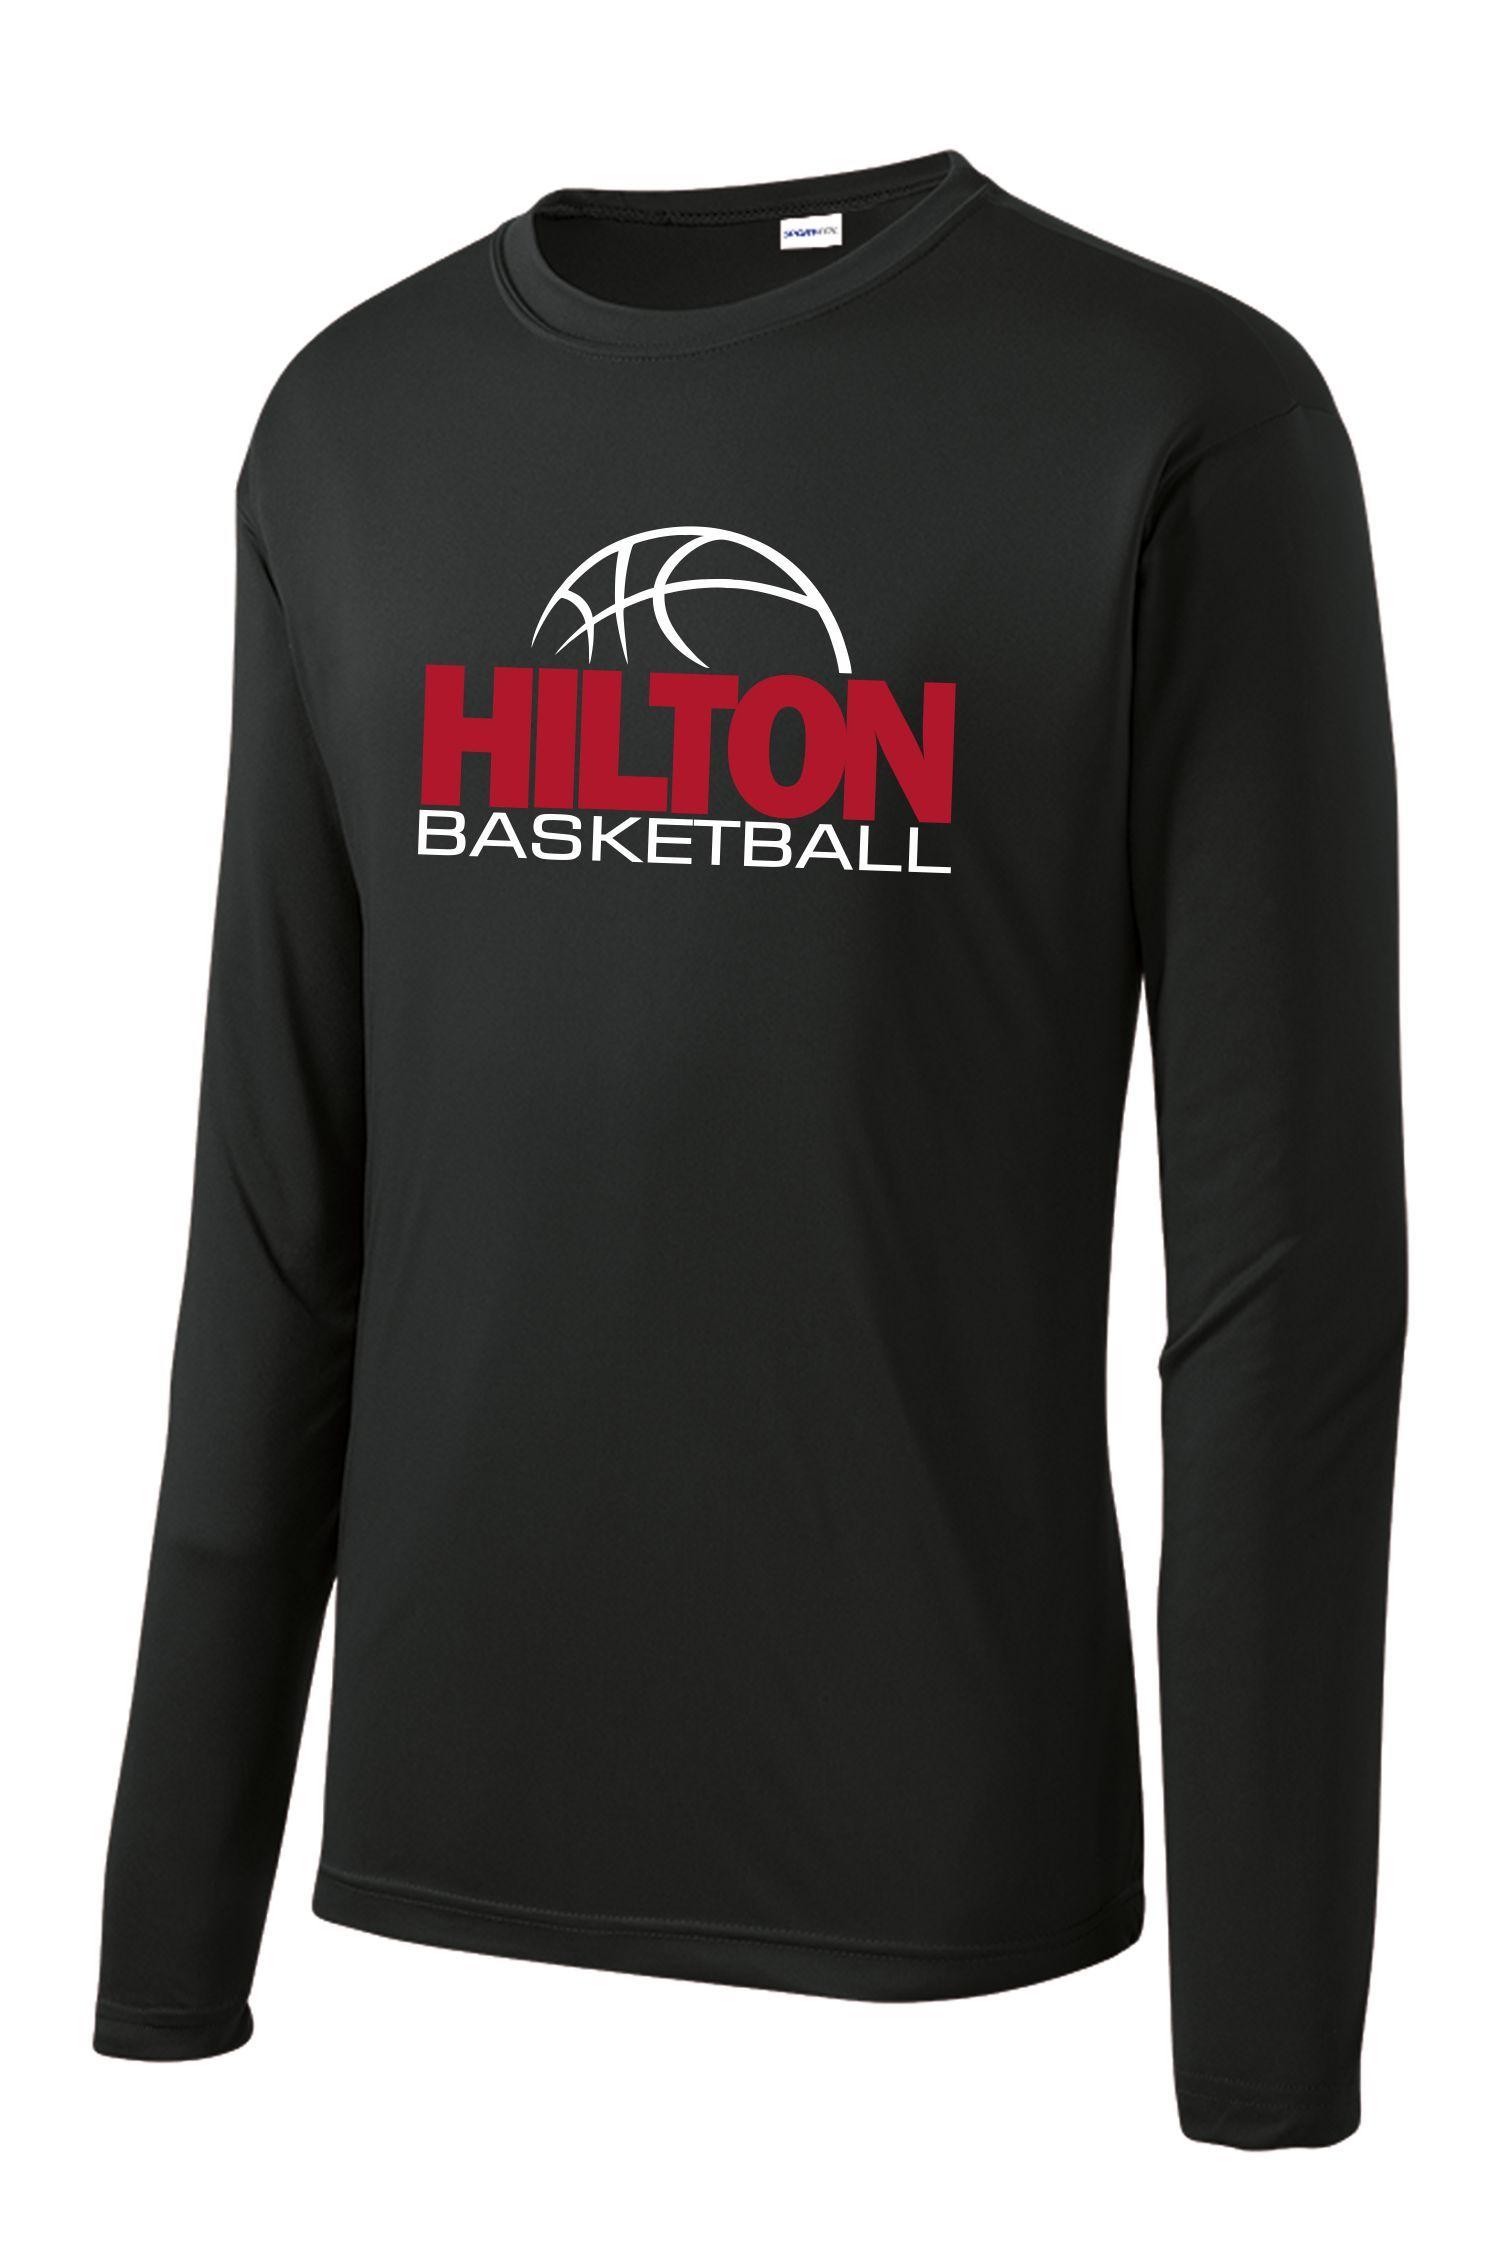 Hilton Clothing Logo - Hilton Select Basketball Shooter Shirt